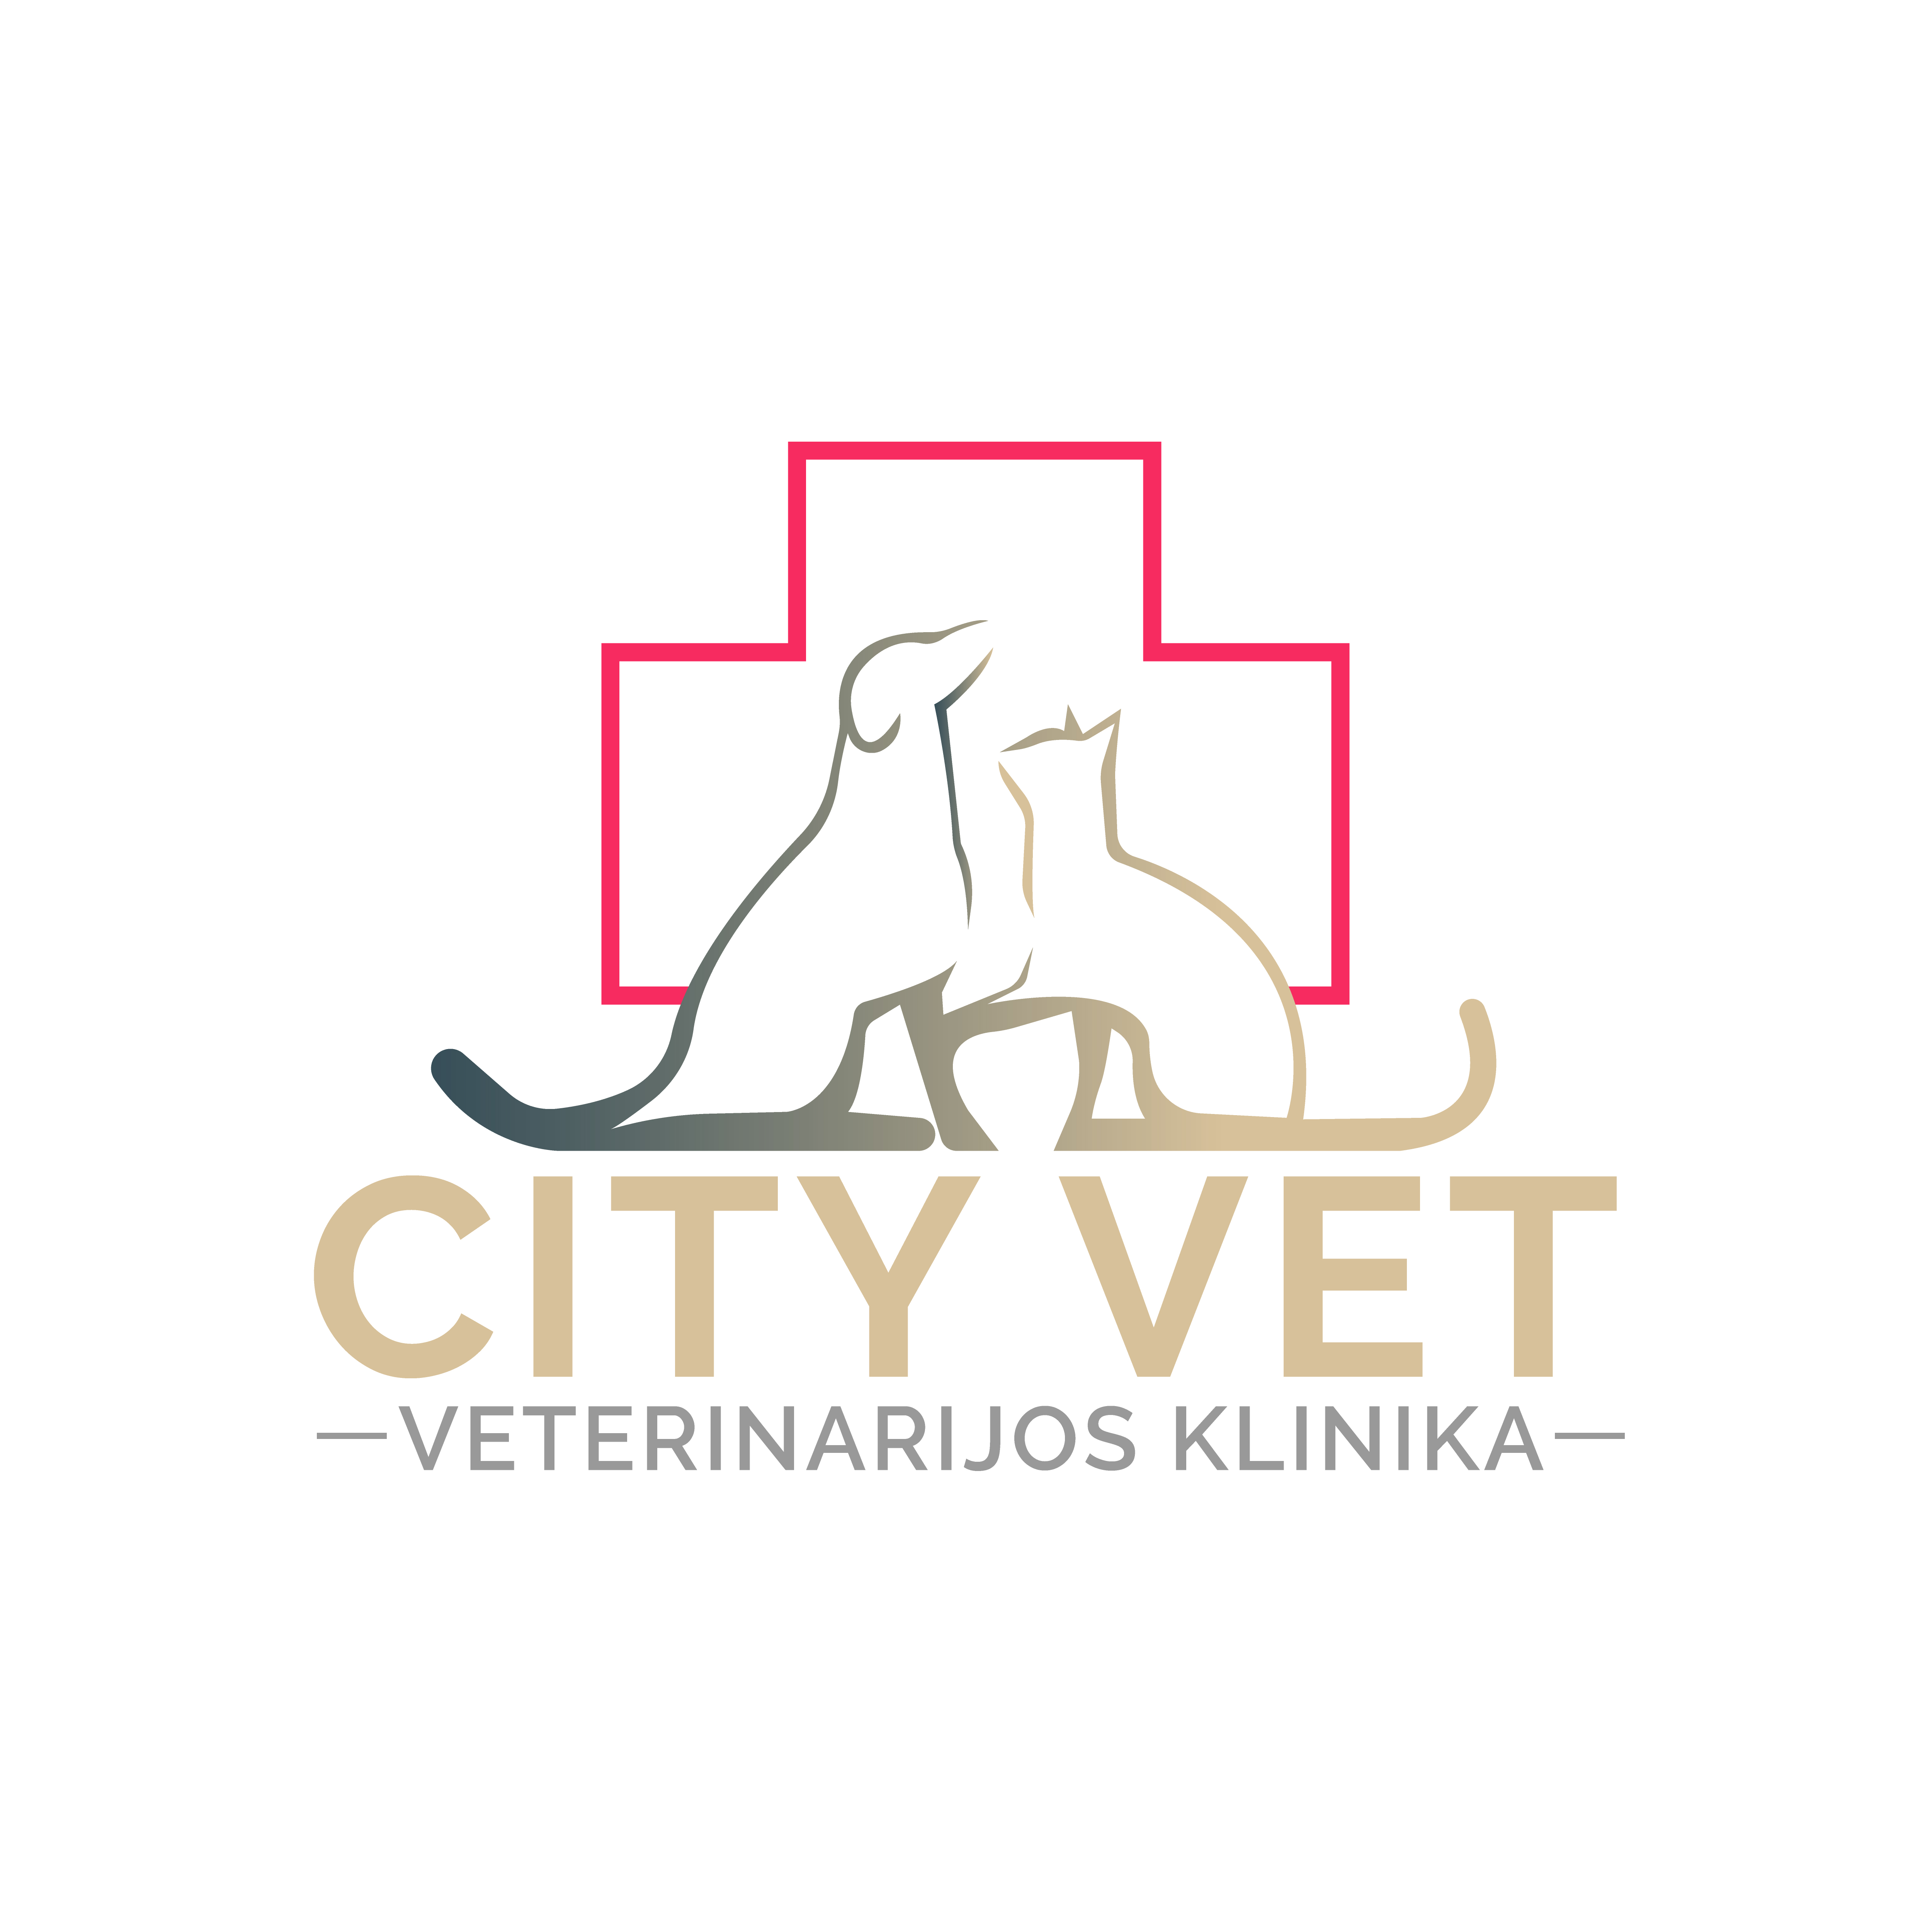 CityVet veterinarijos klinika